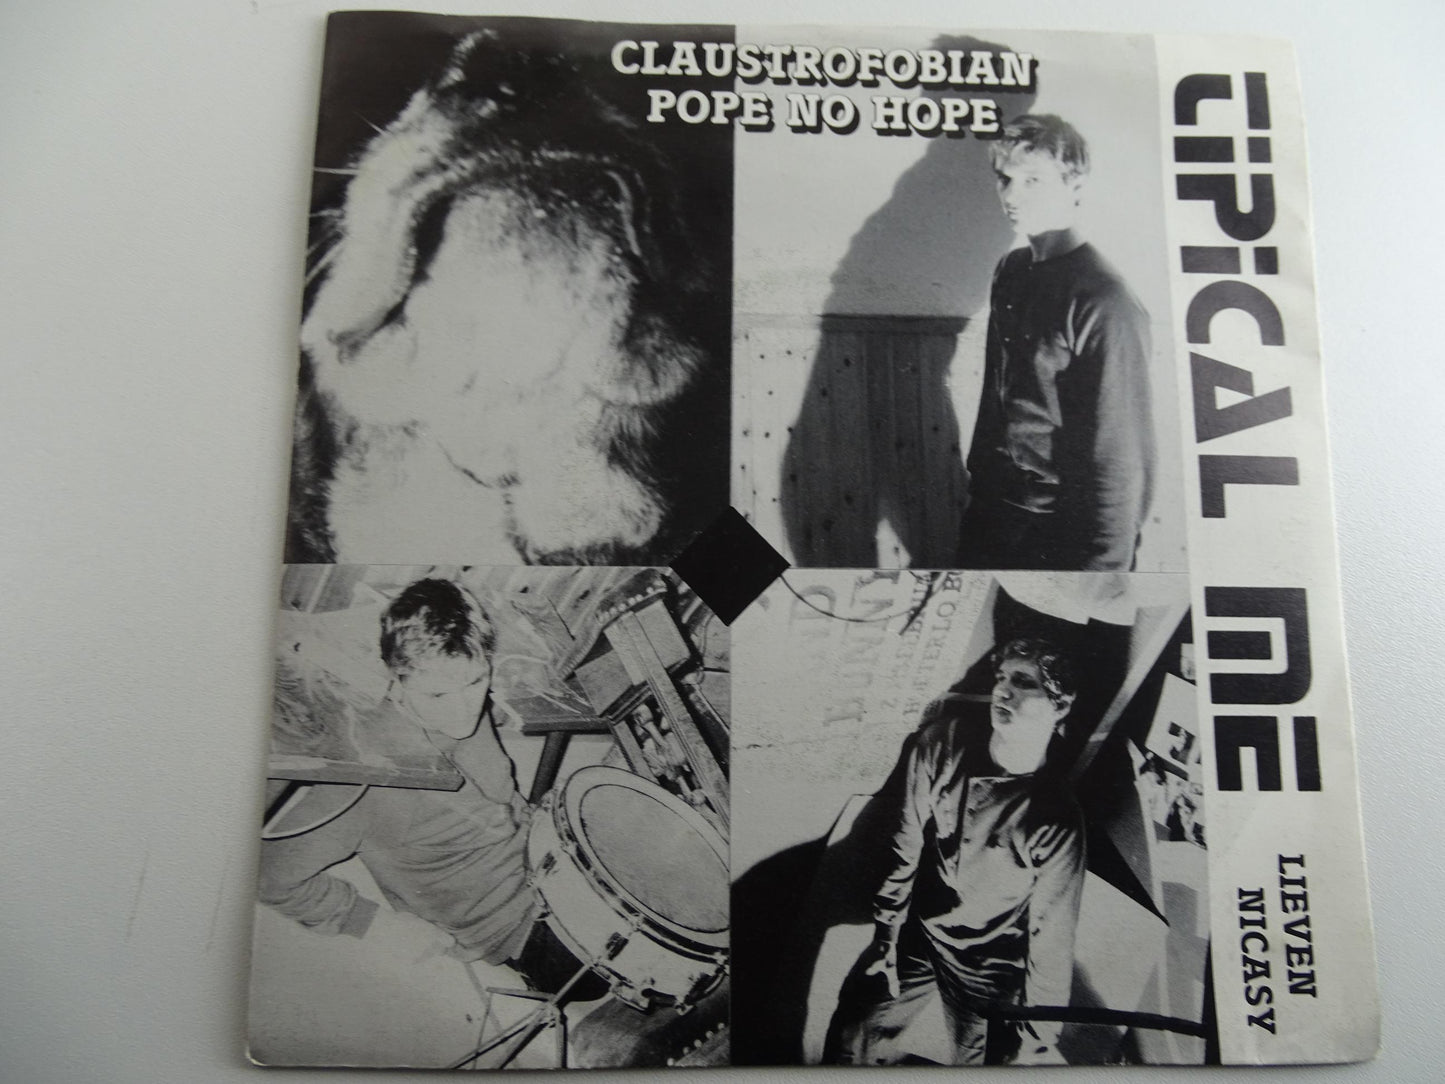 Zeldzame Single, Tipical Me: Claustrophobian, 1985